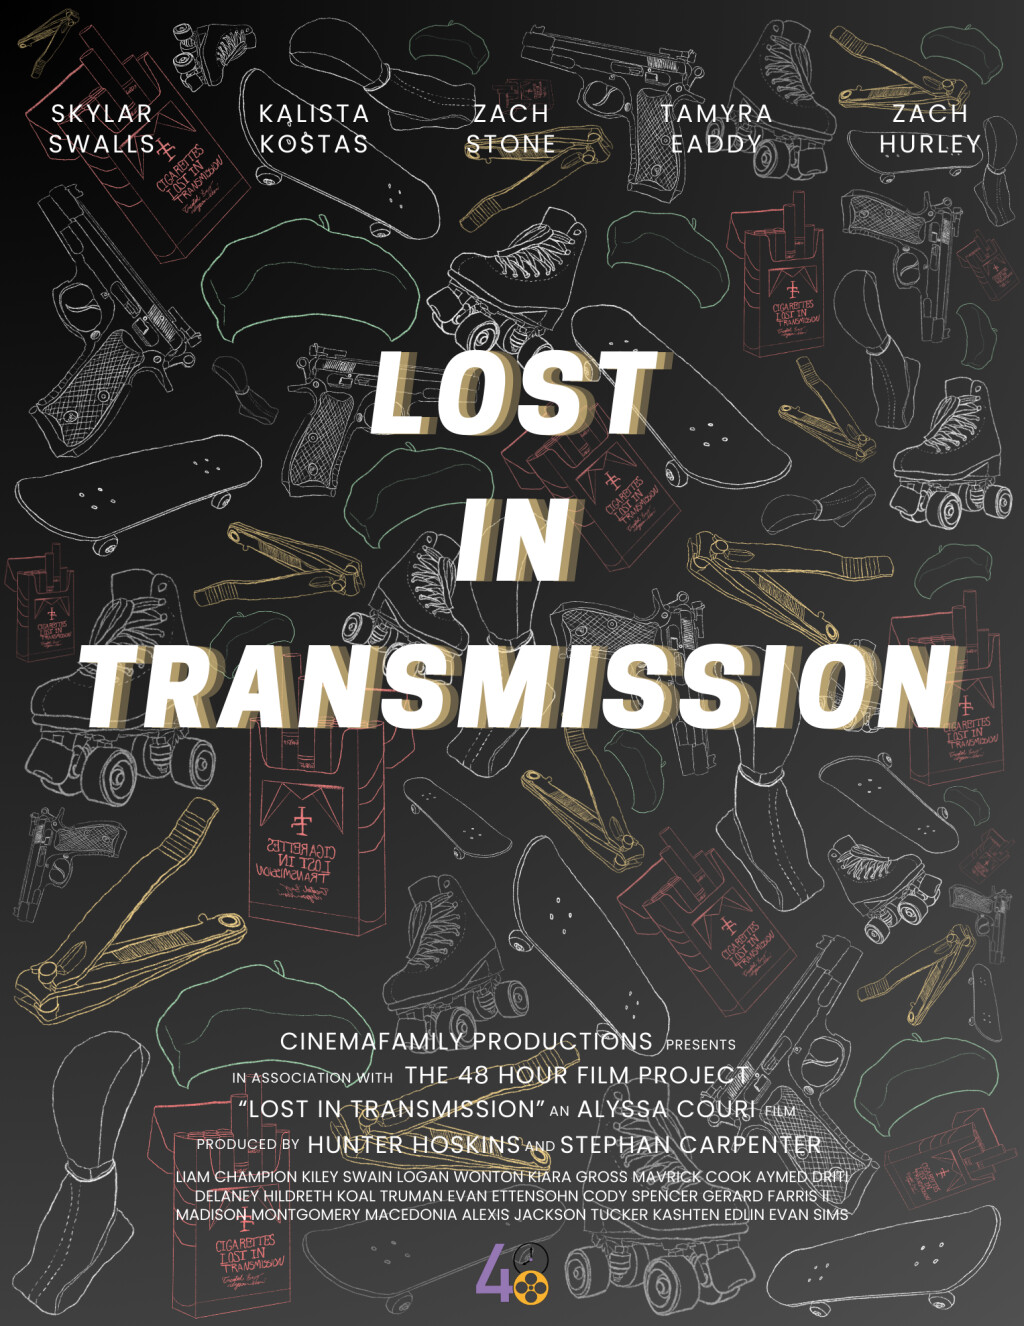 Filmposter for Lost in Transmission